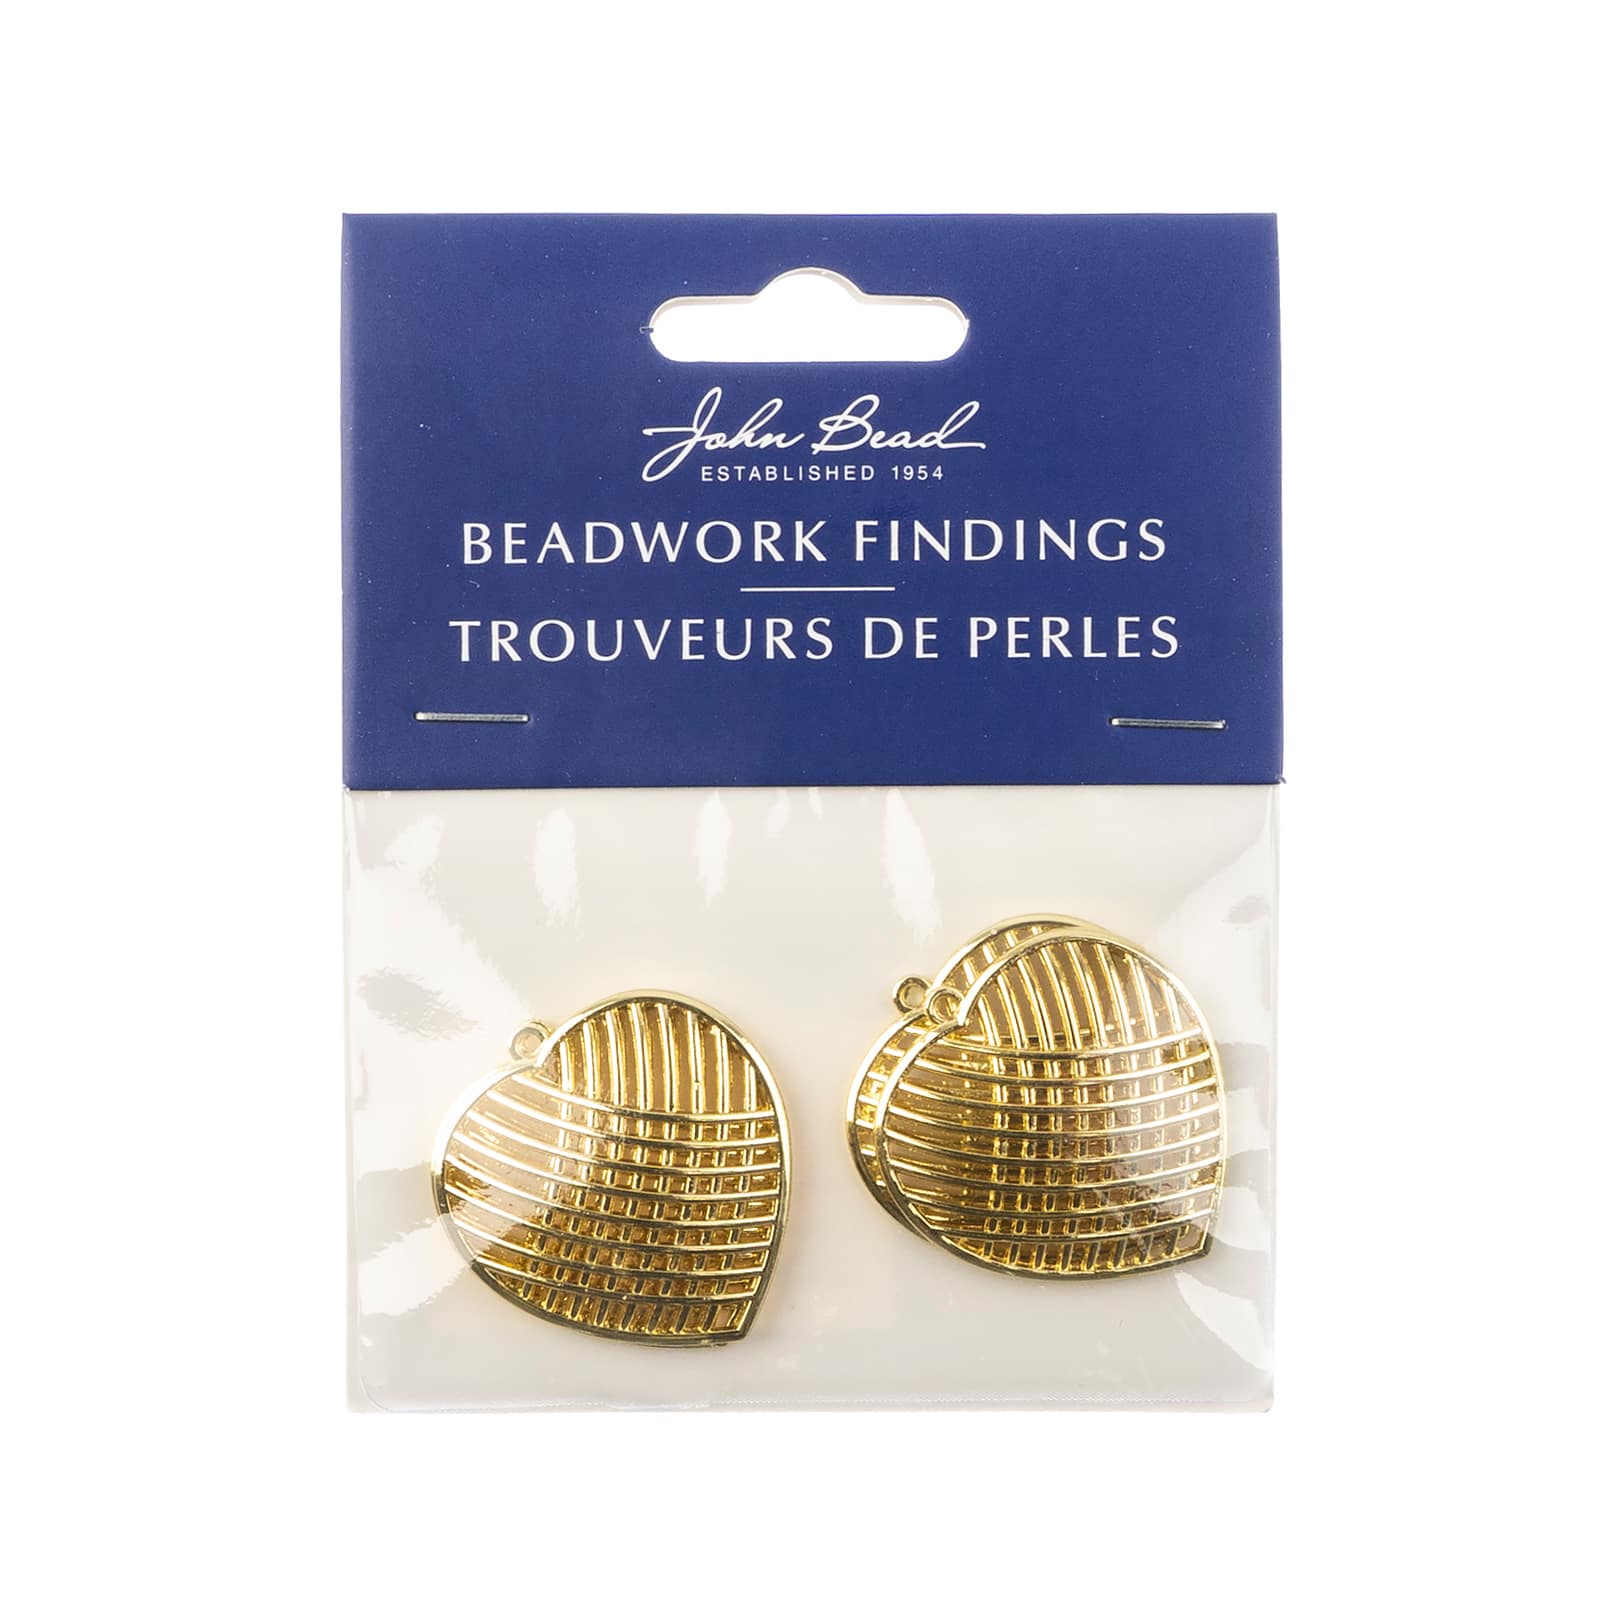 John Bead Beadwork Findings Gold Crossed Heart Pendant, 4ct.